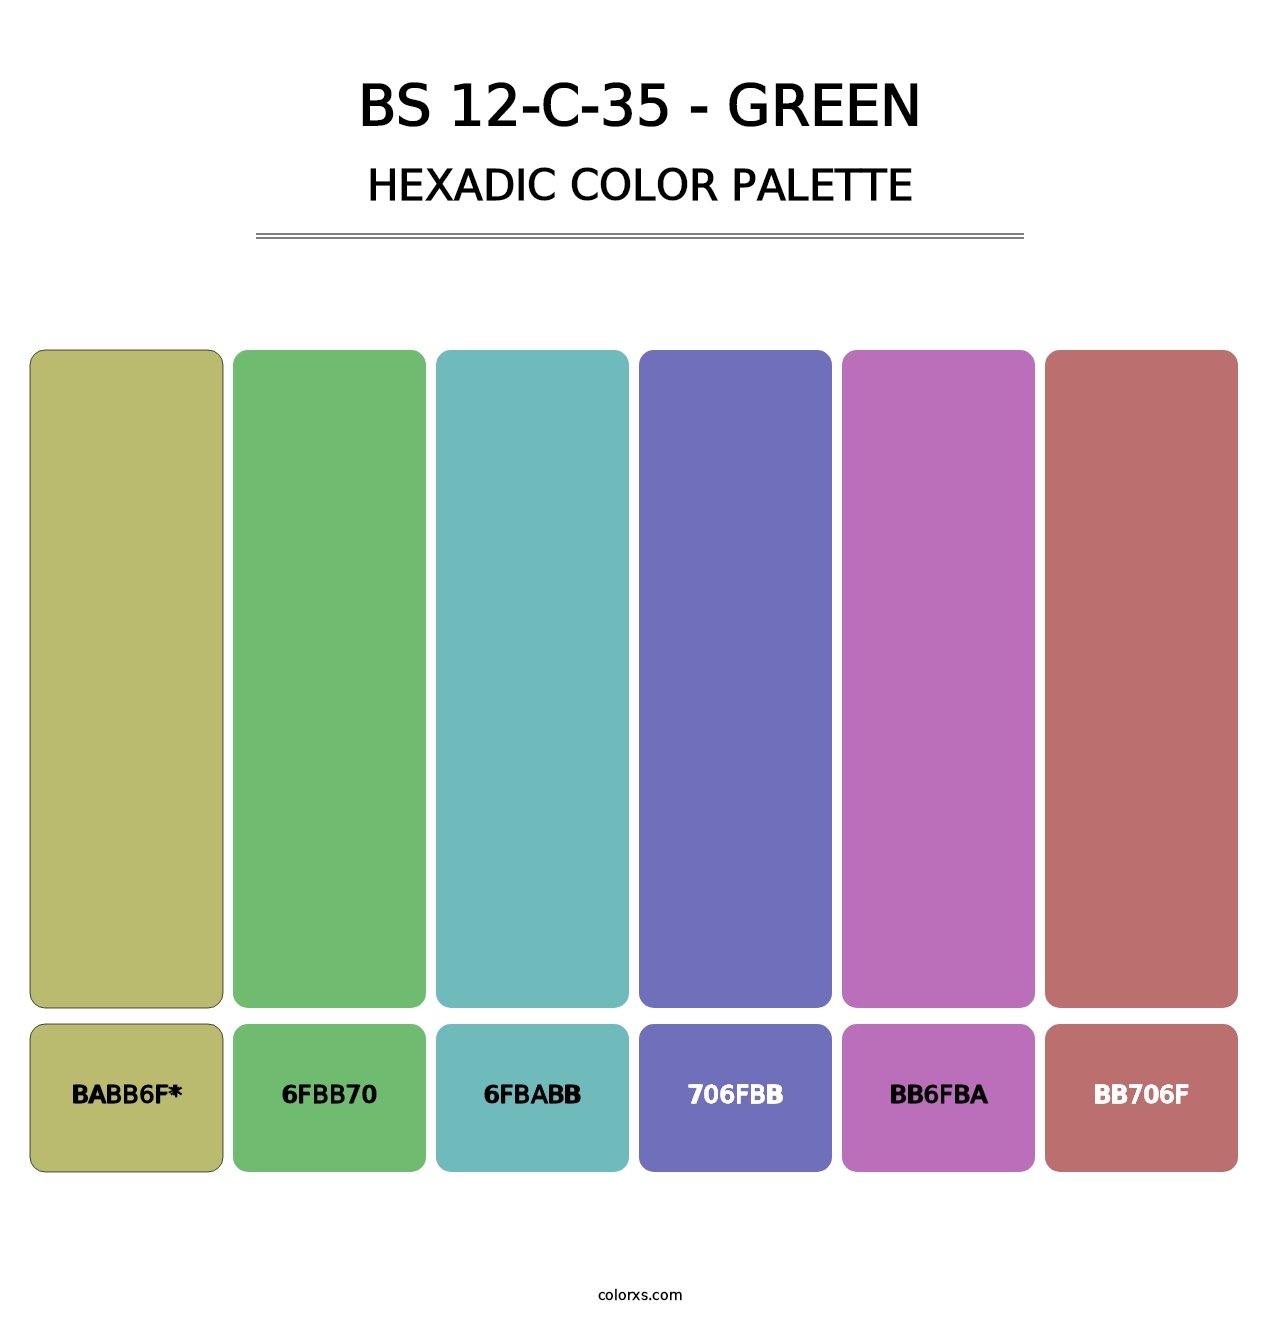 BS 12-C-35 - Green - Hexadic Color Palette